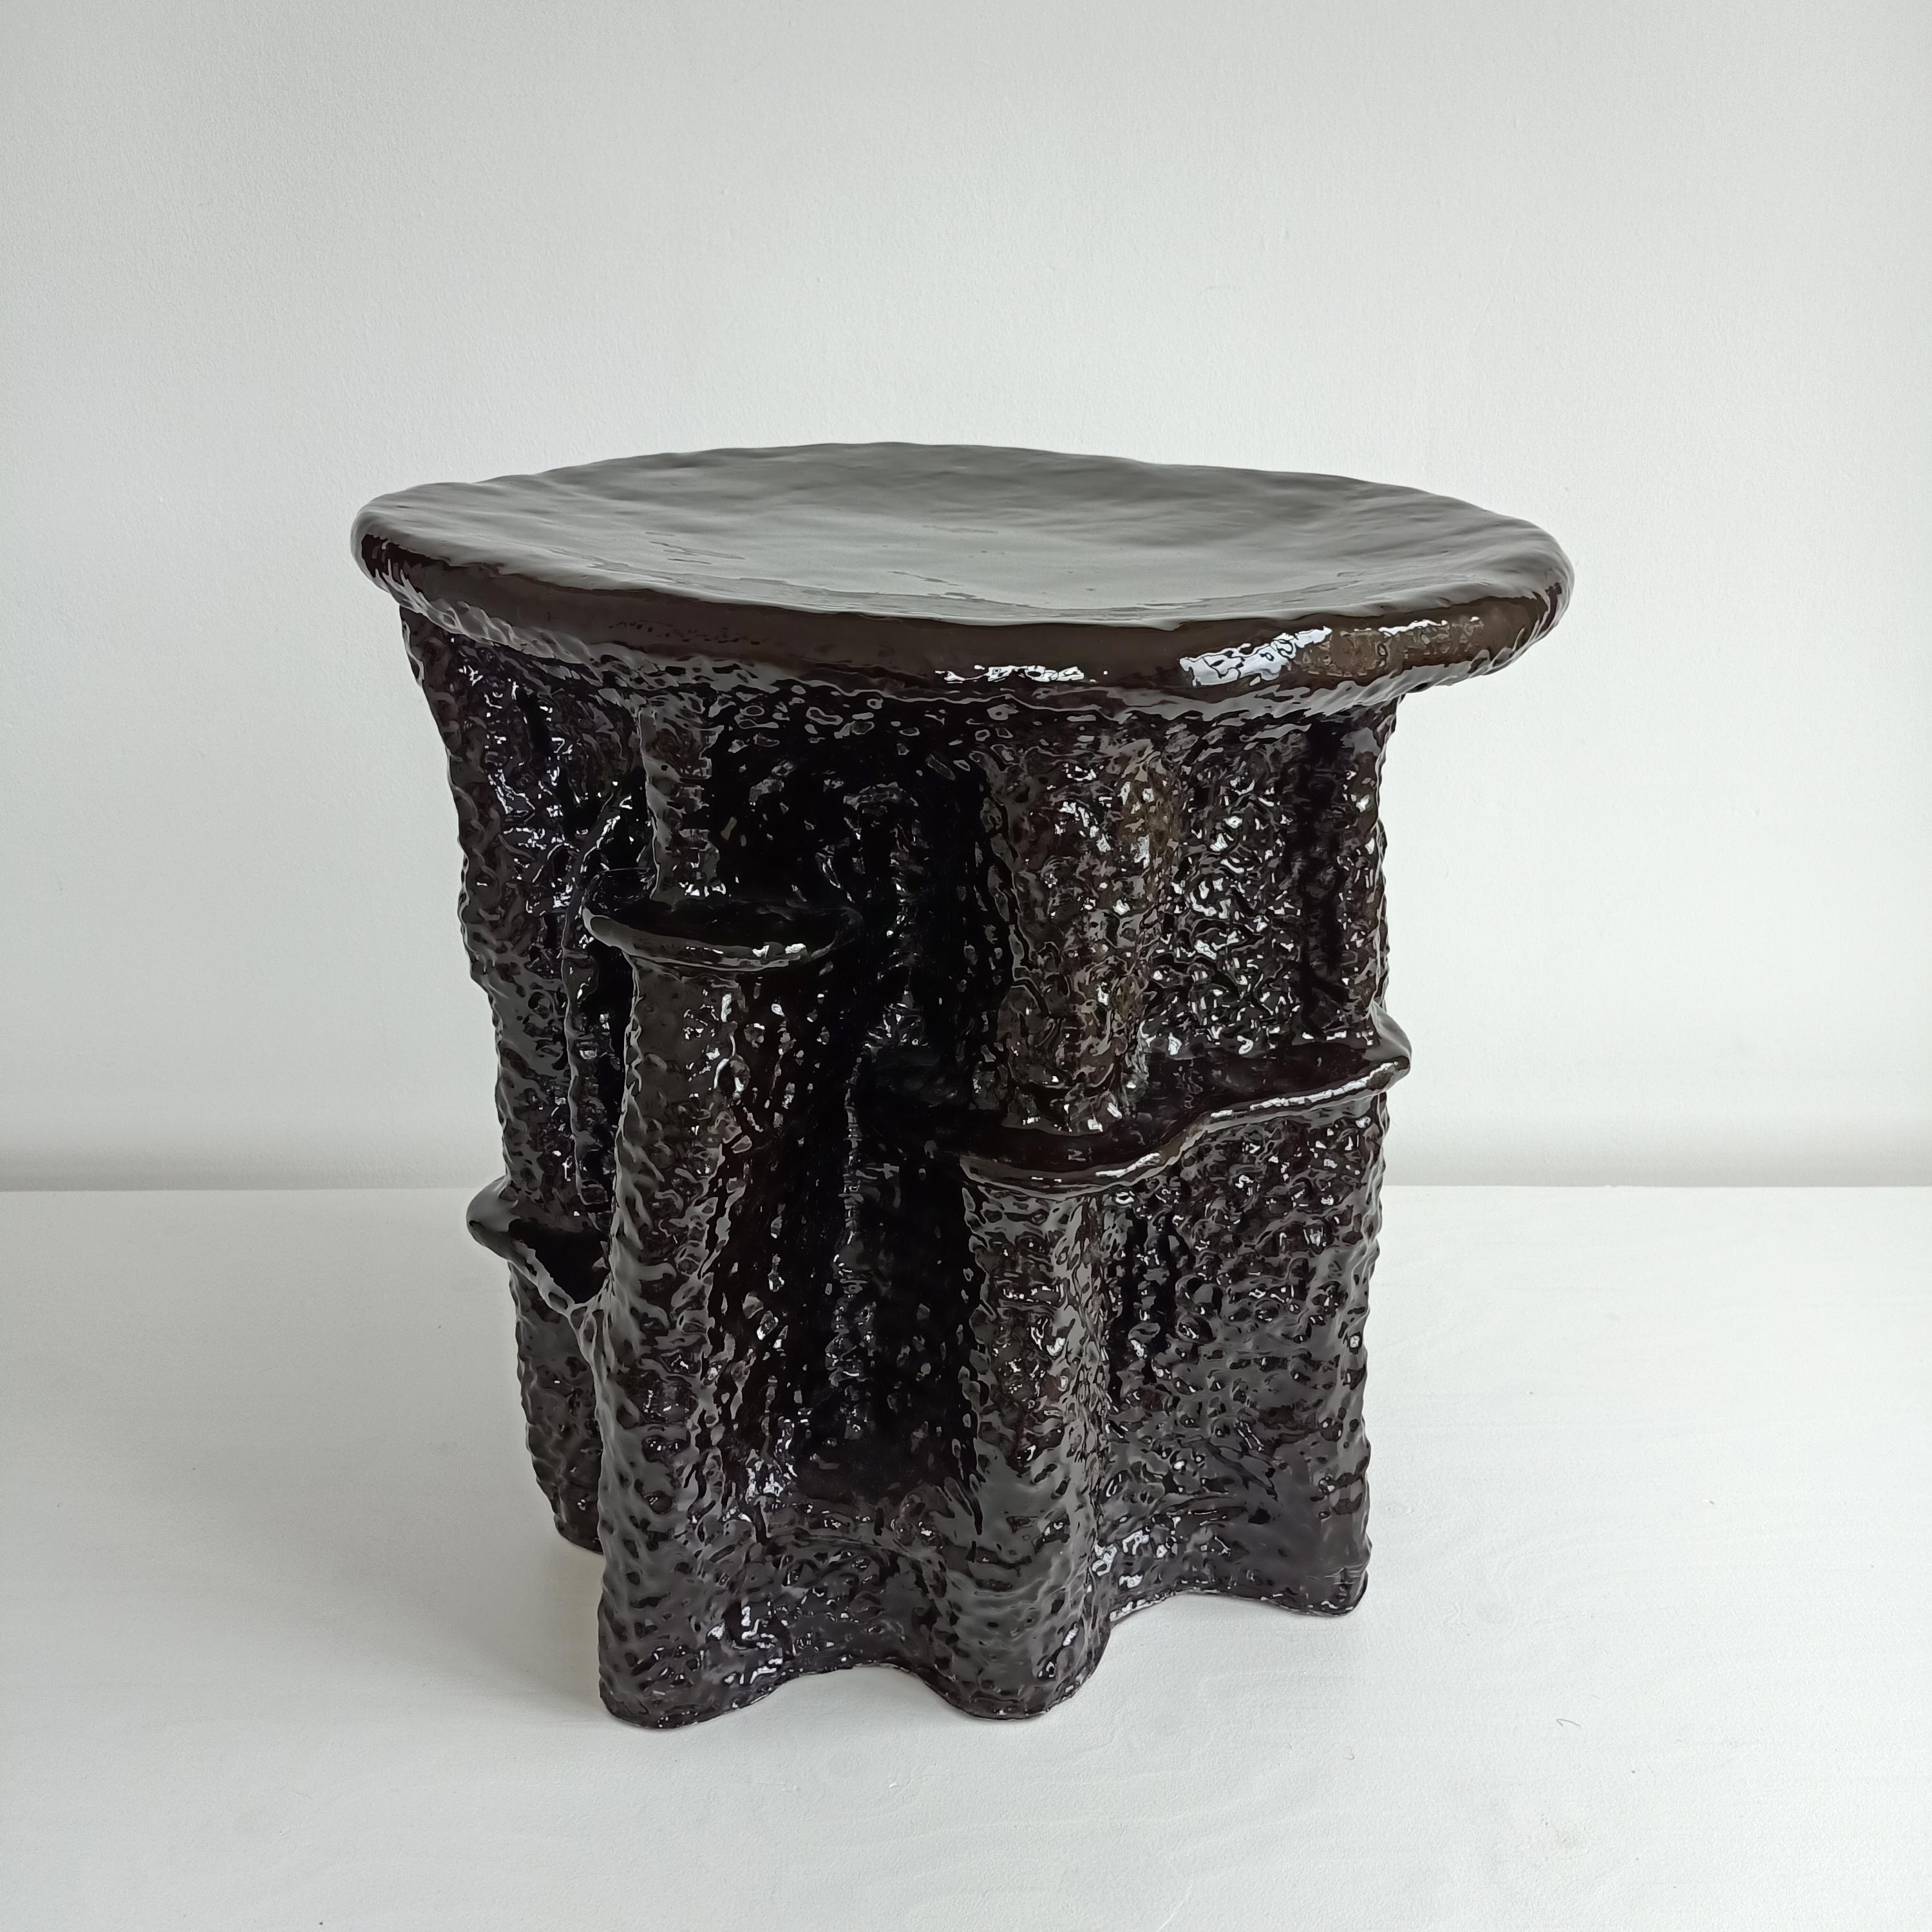 Contemporary Ceramic Furniture, Table, 2020, Rutger de Regt, the Netherlands 1